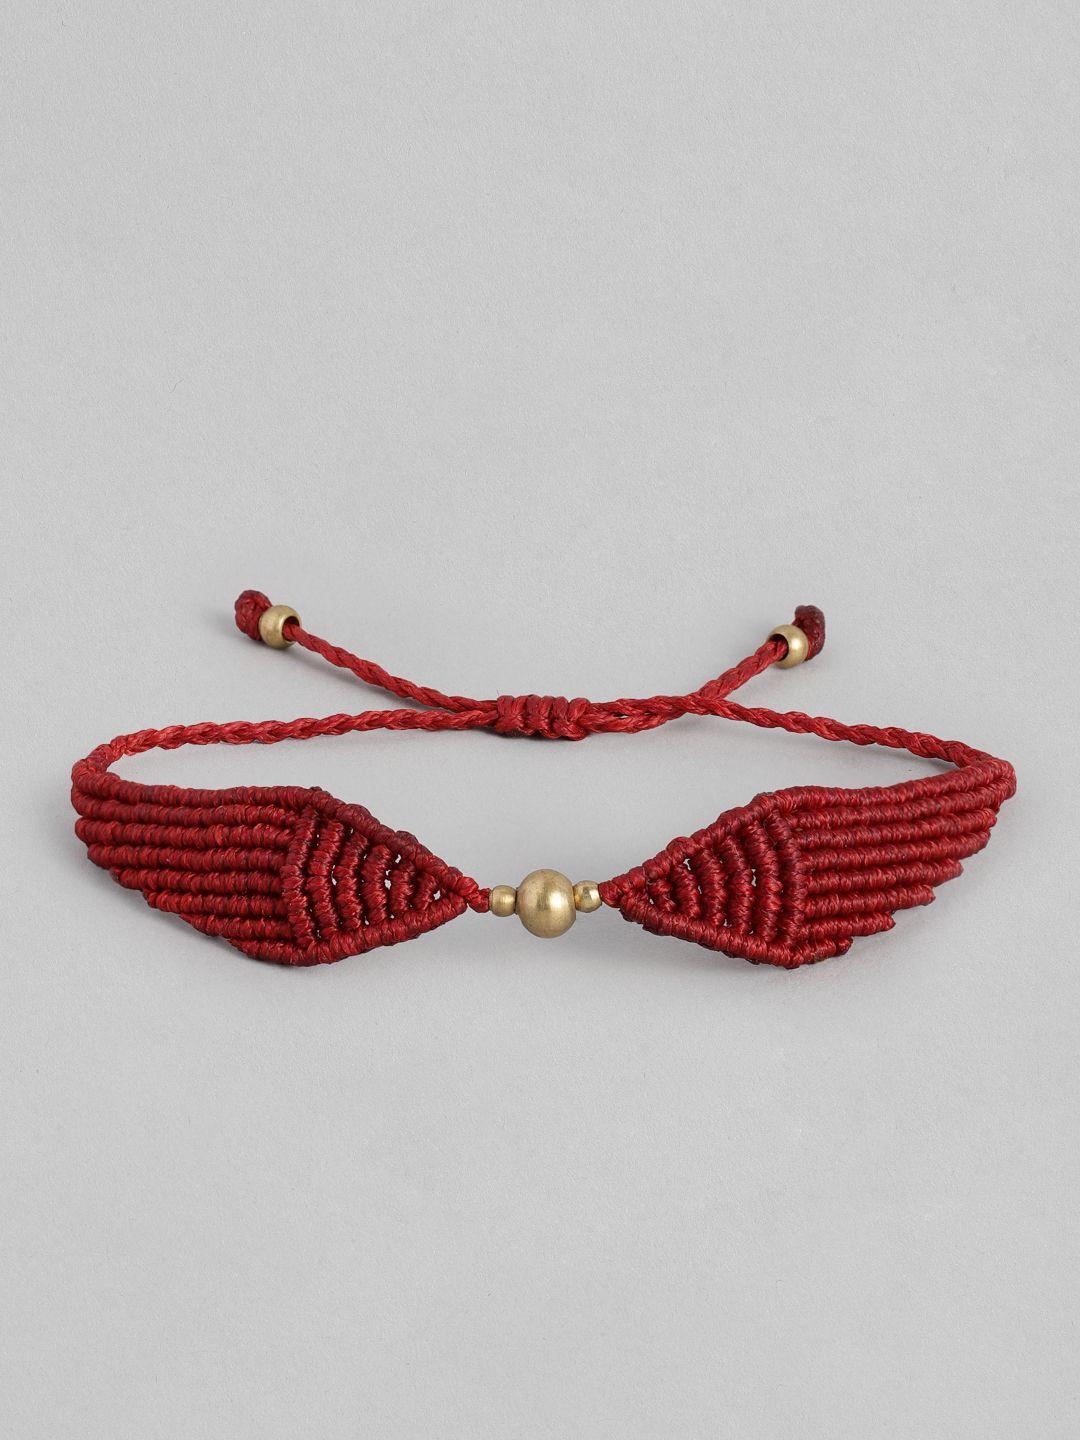 el regalo unisex maroon & gold-toned macrame snitch handcrafted wraparound bracelet